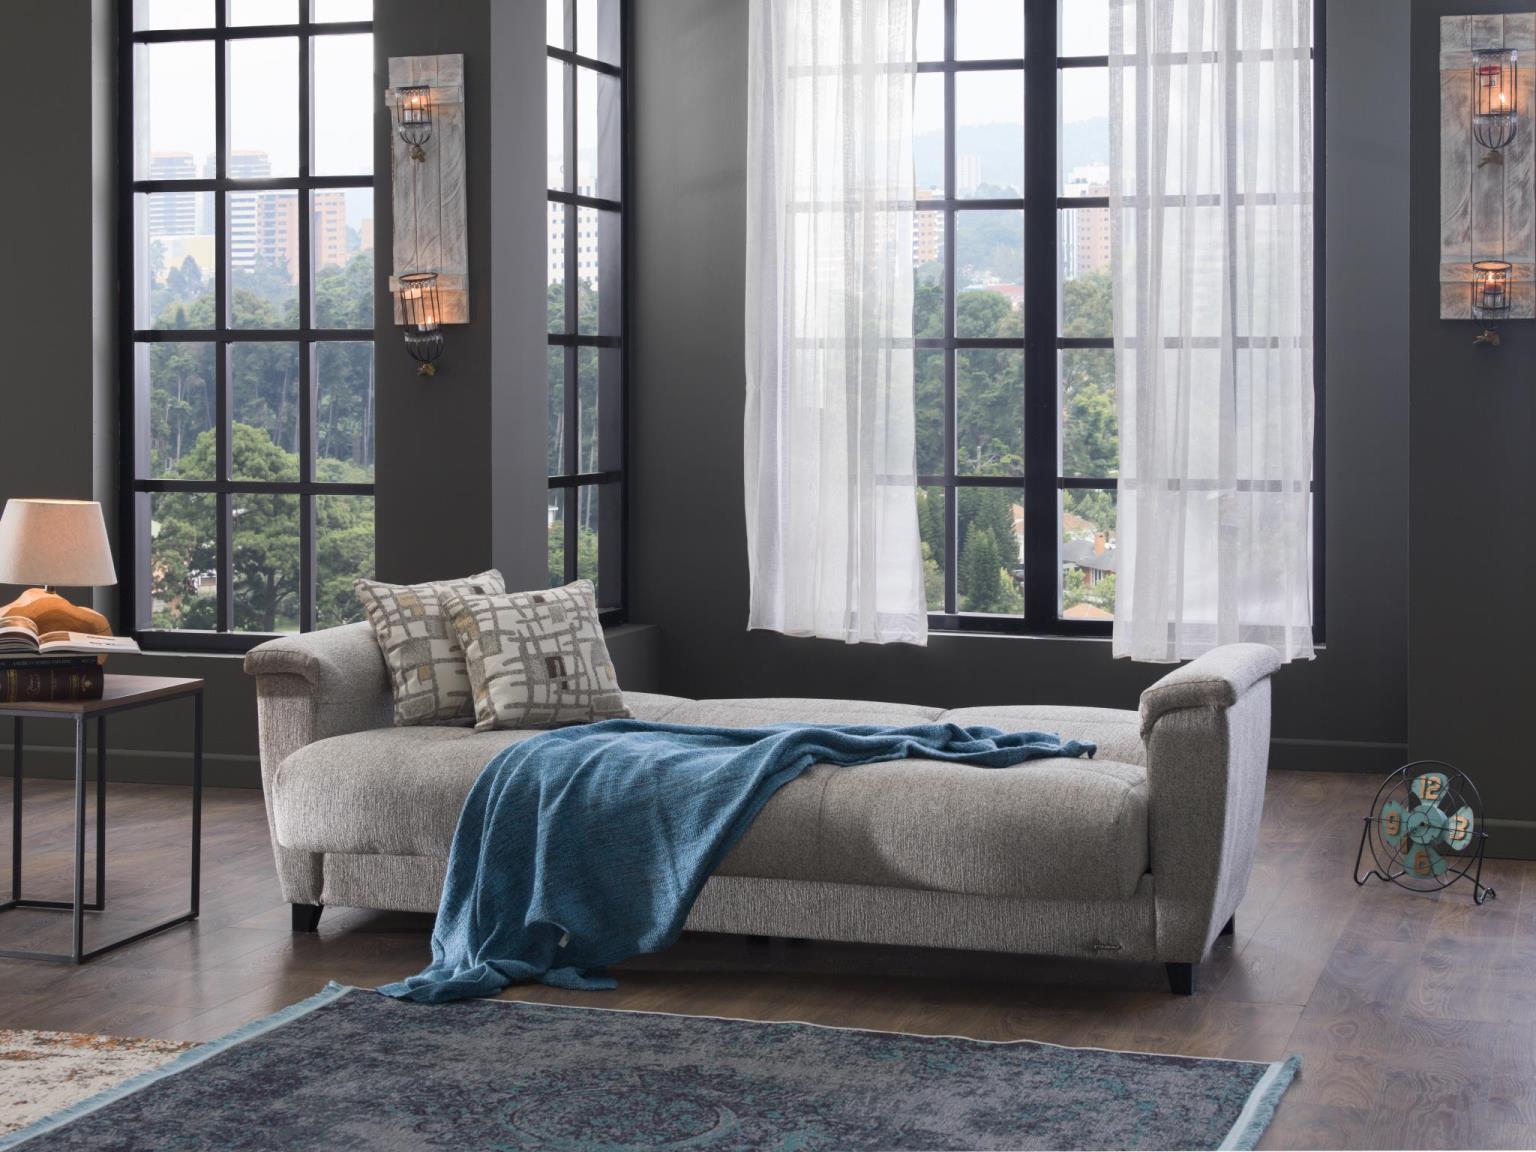 Aspen Set (Sofa & Loveseat & Chair) - Home Store Furniture